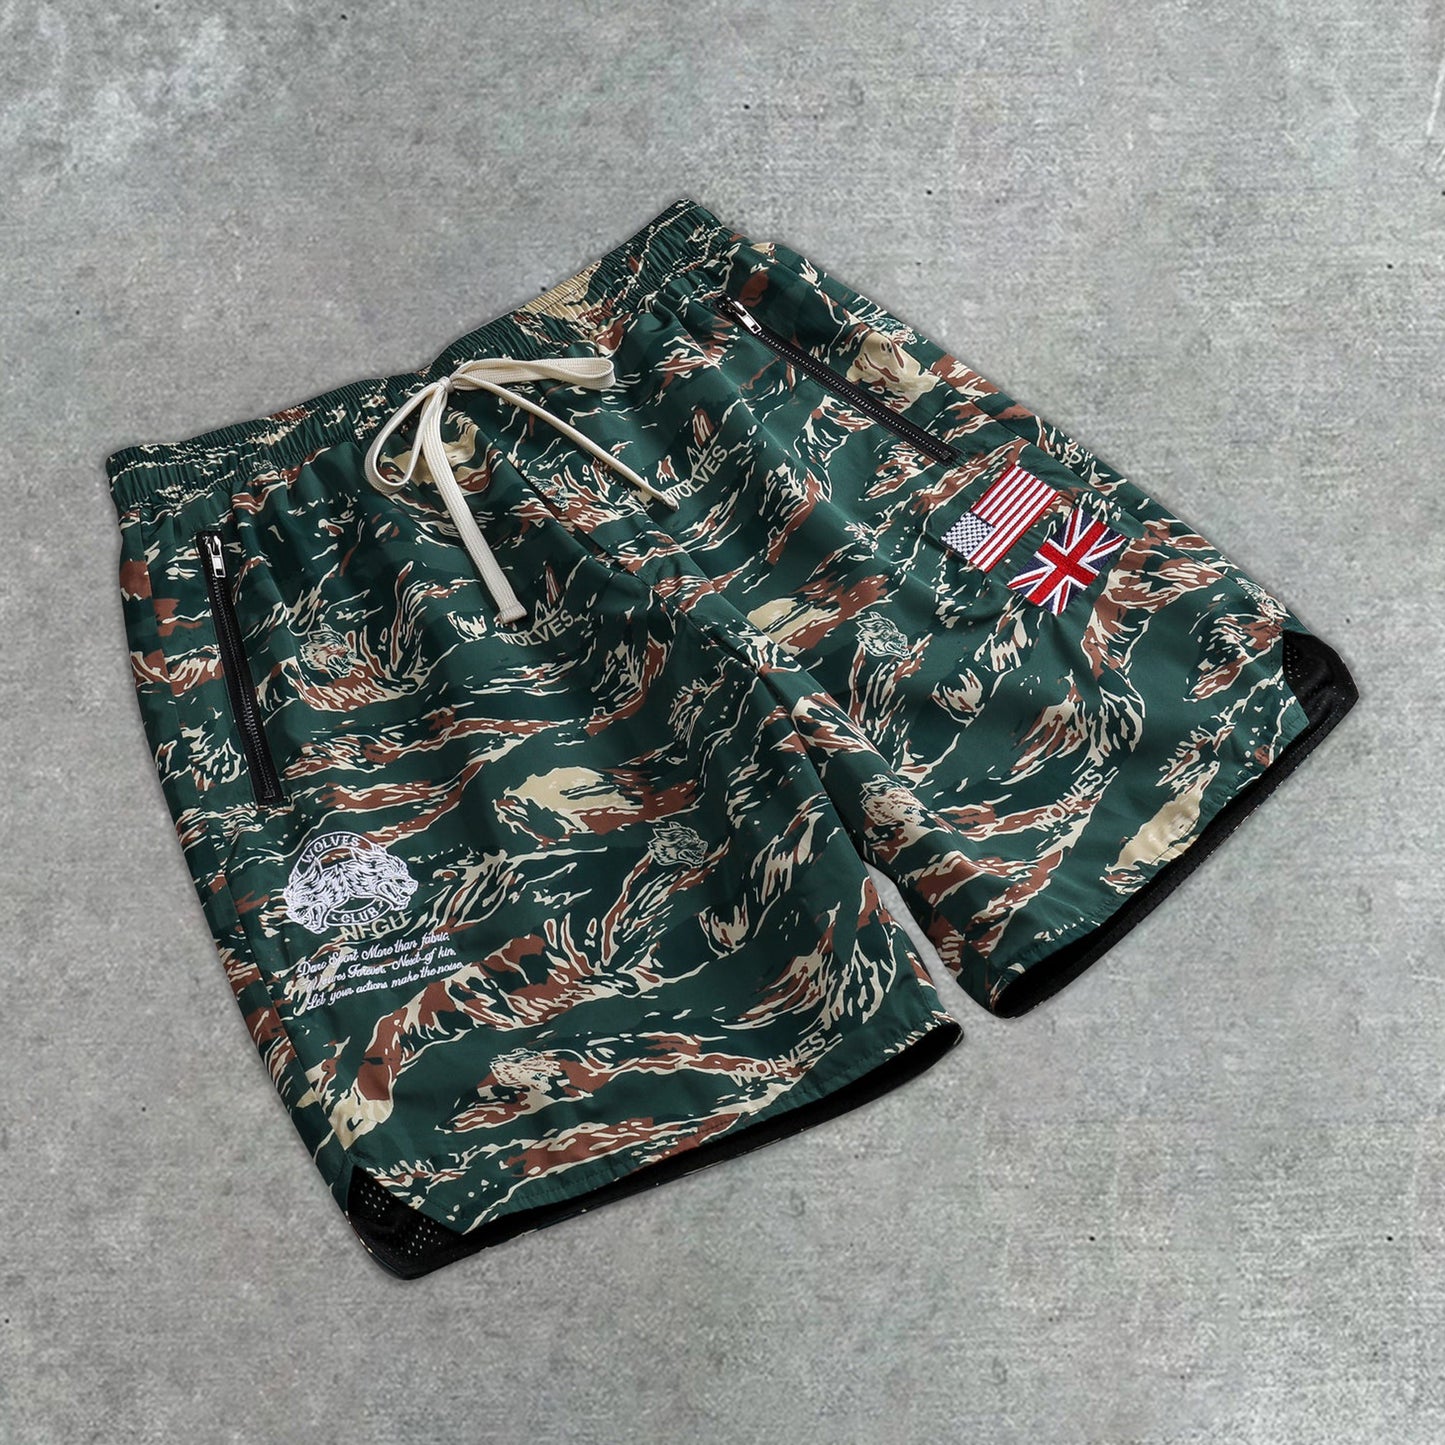 Personalized fashion camouflage fitness sports shorts